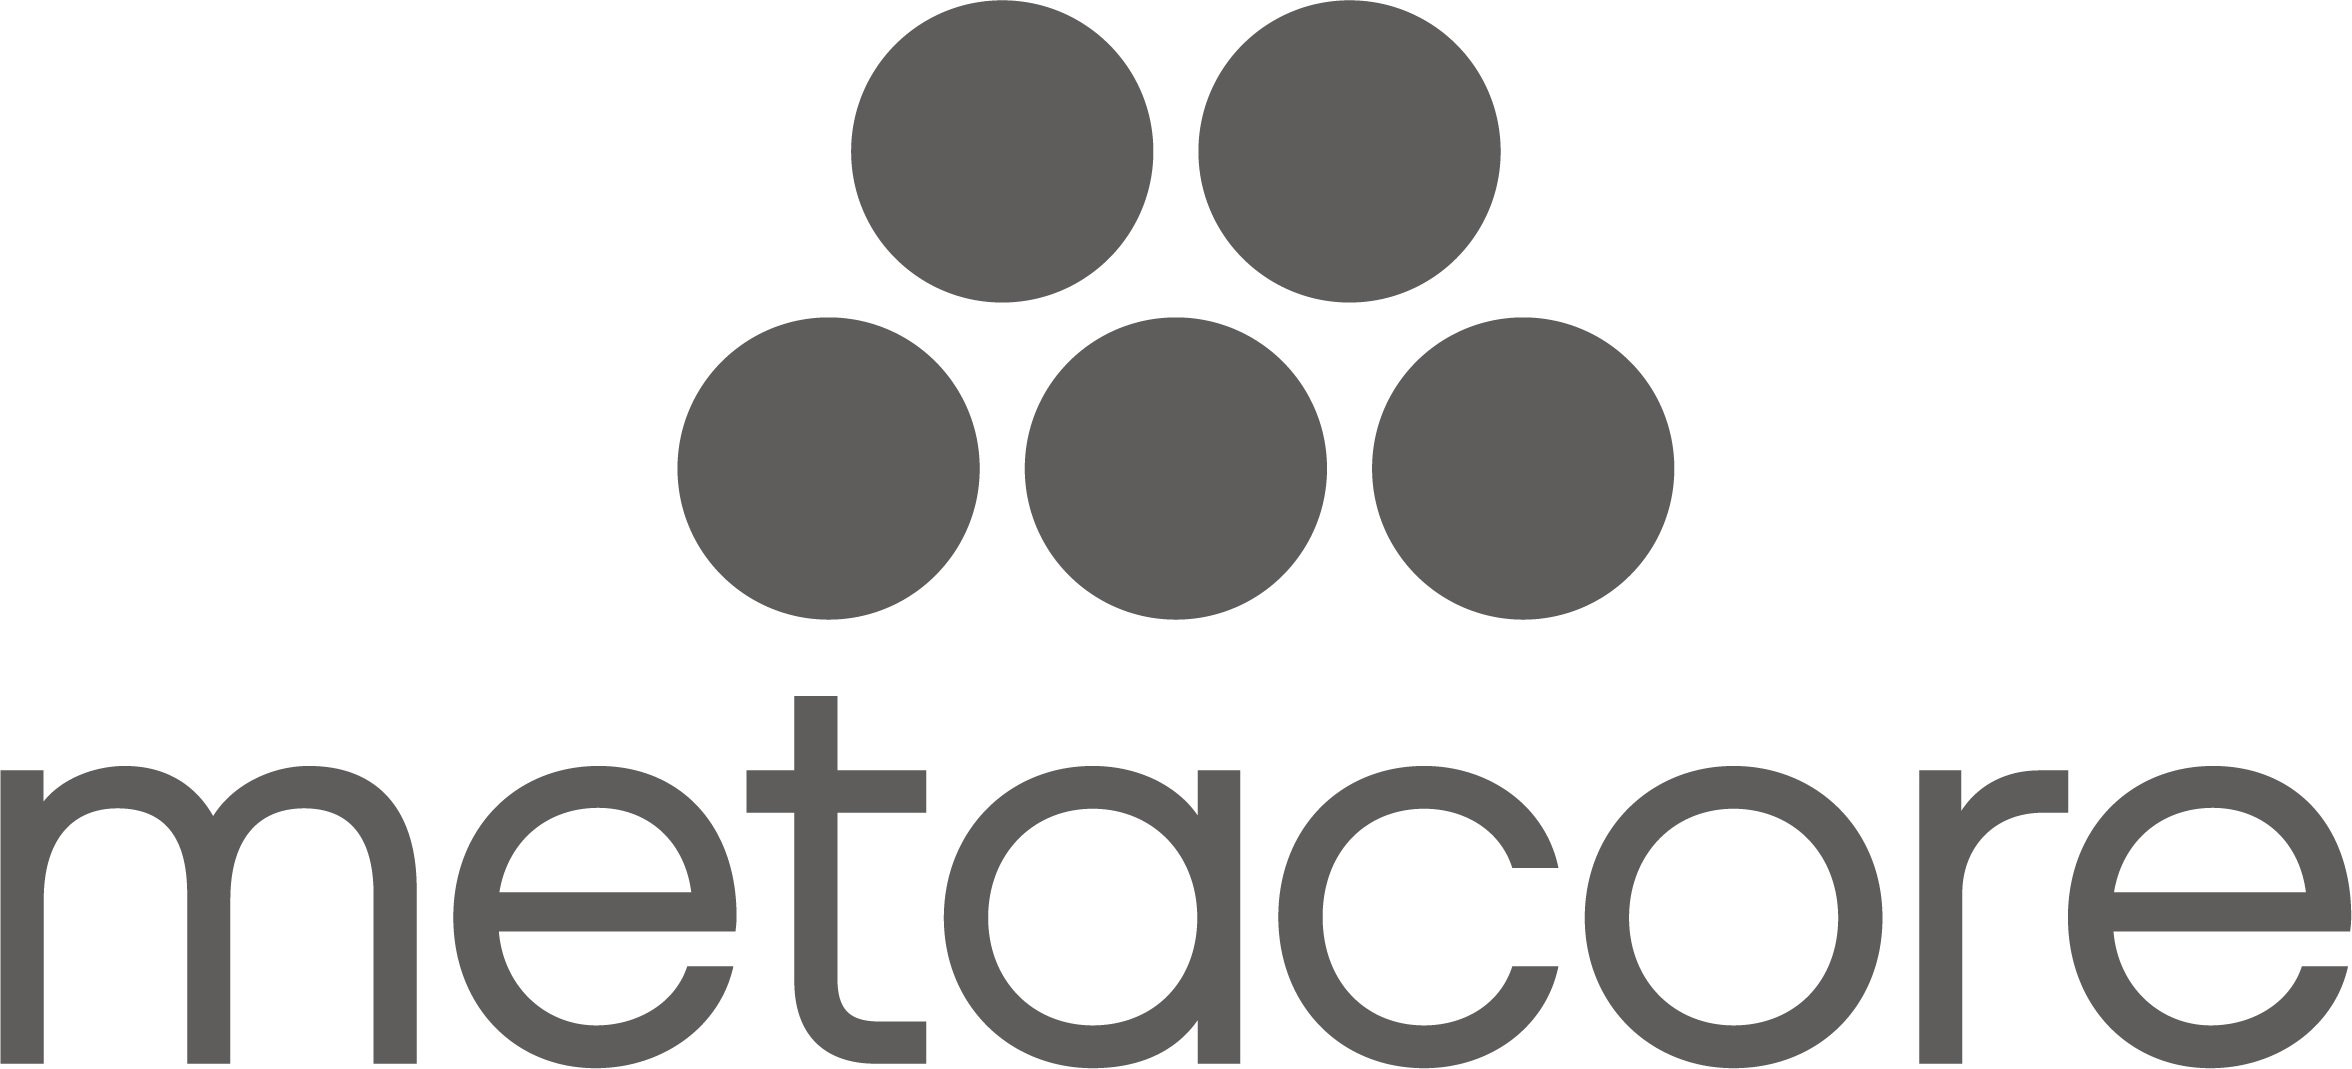 Metacore_logo_Black.jpg